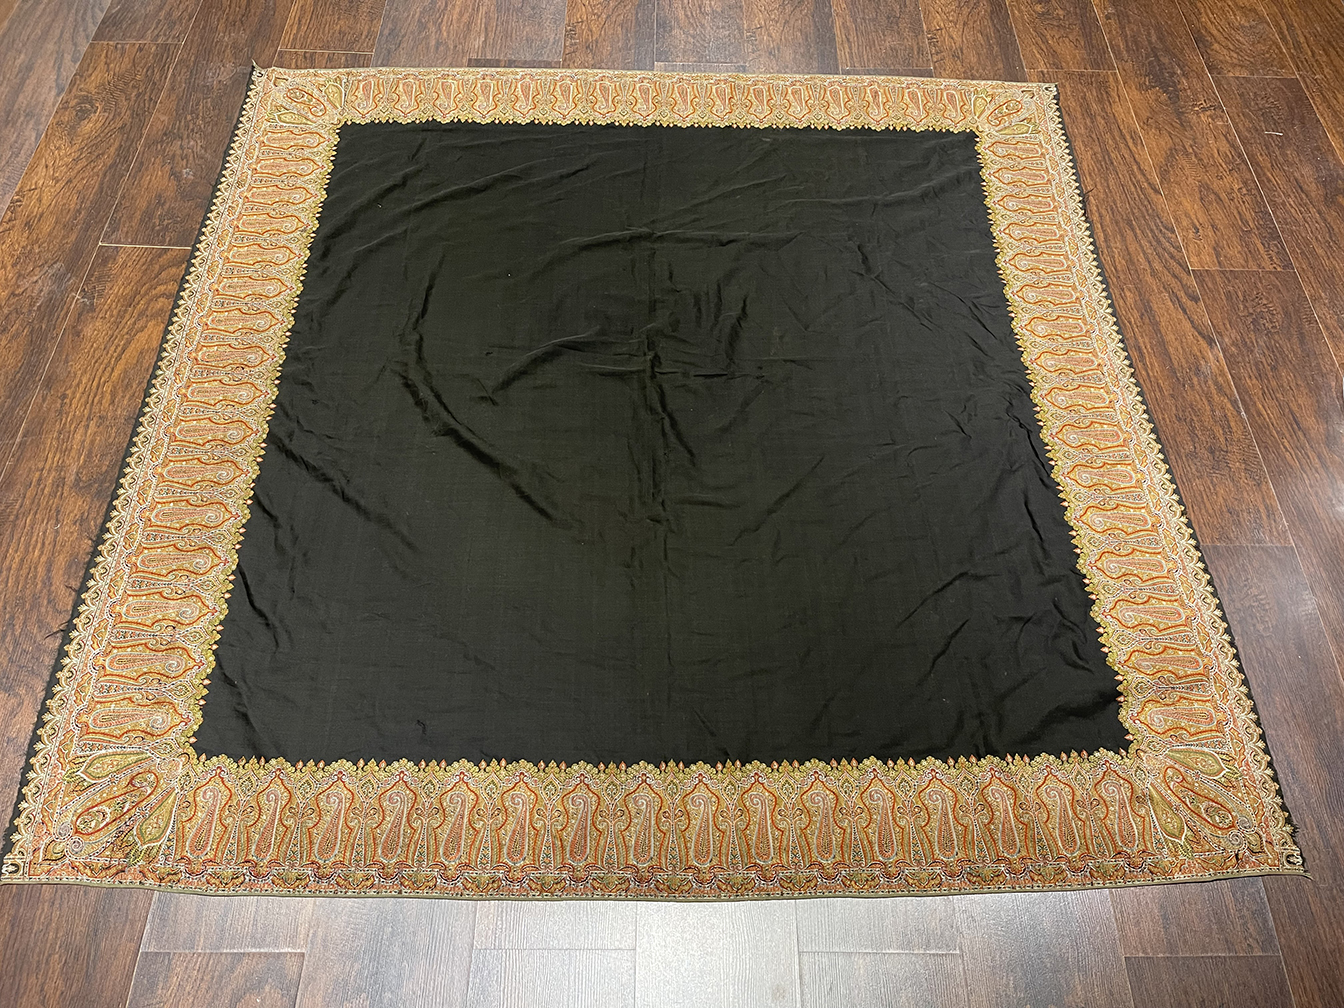 Antique paisley shawl - # 56576